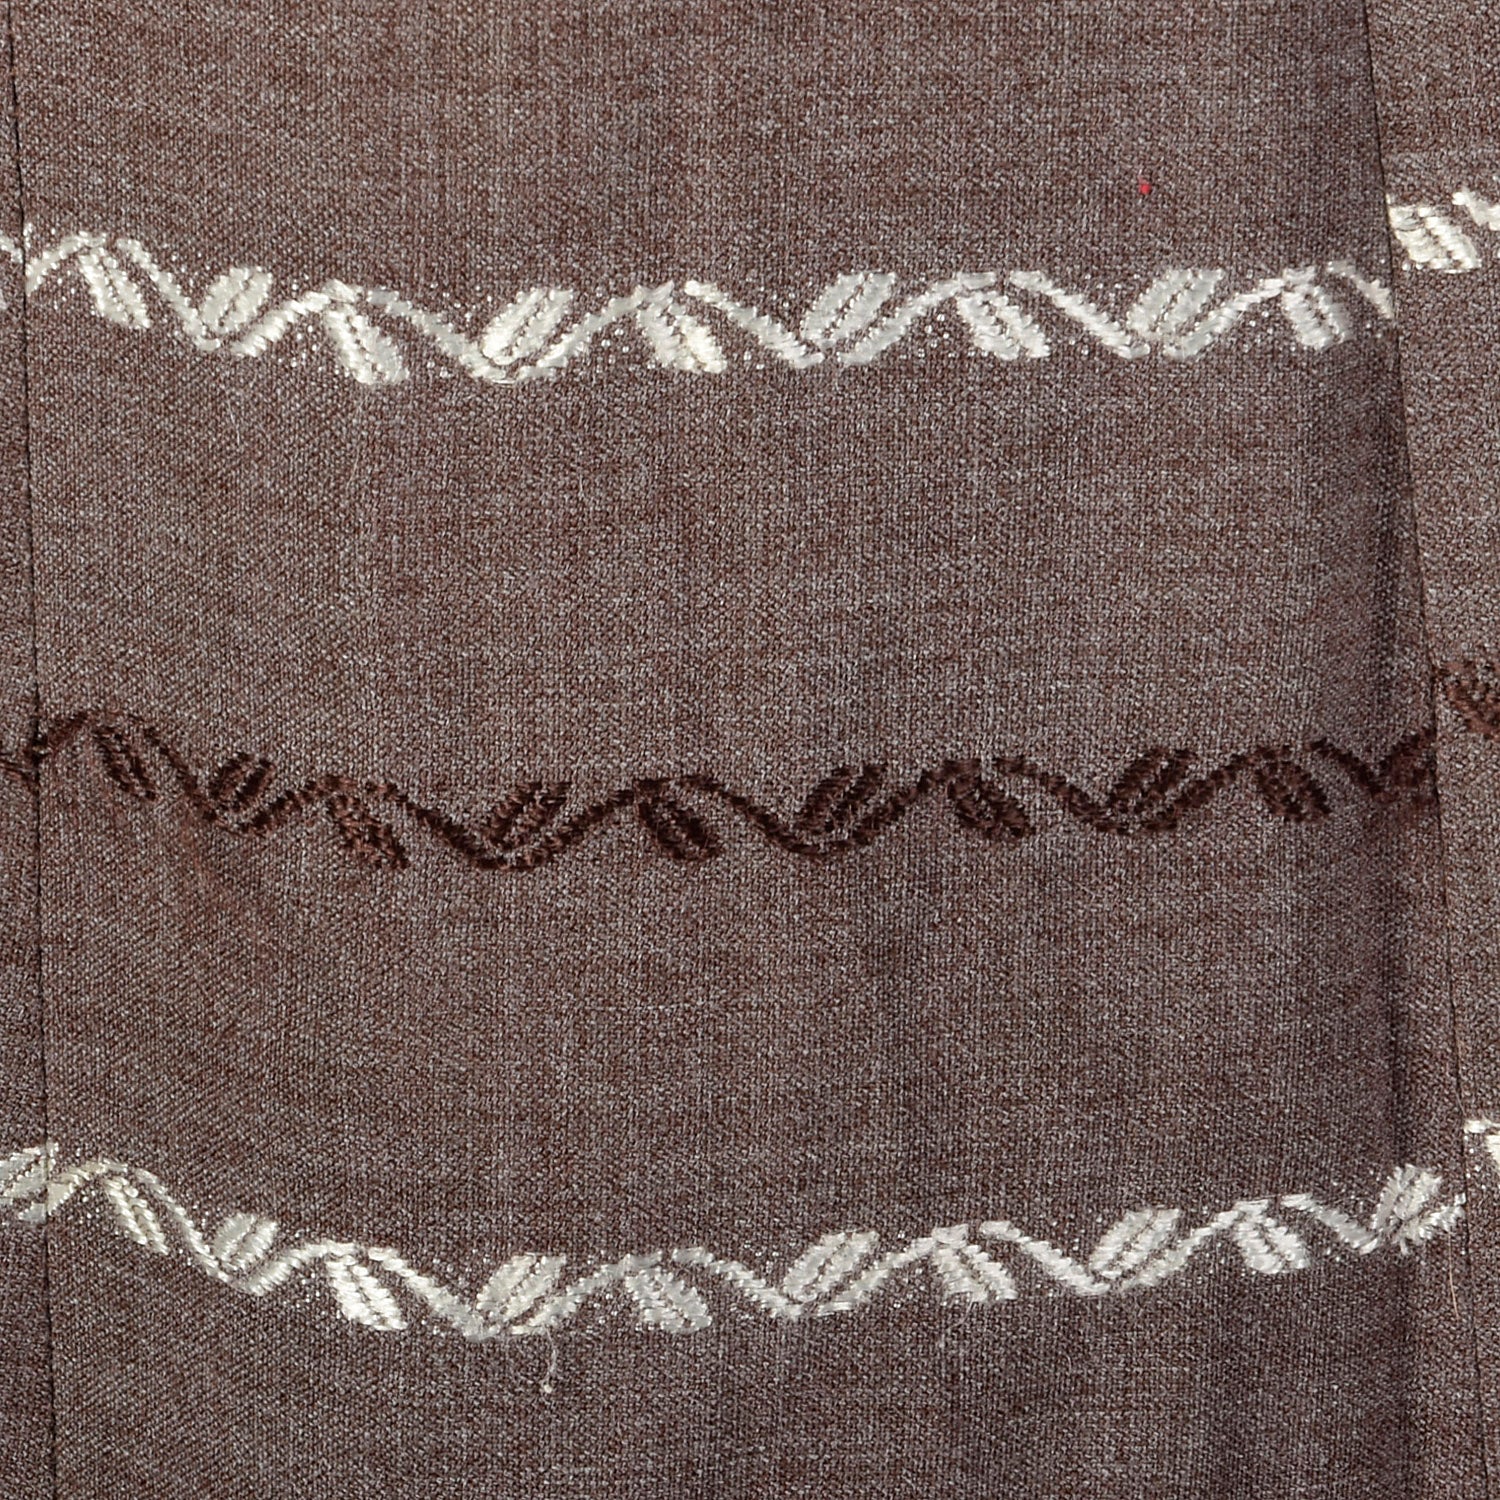 Medium 1950s Brown Striped Dress